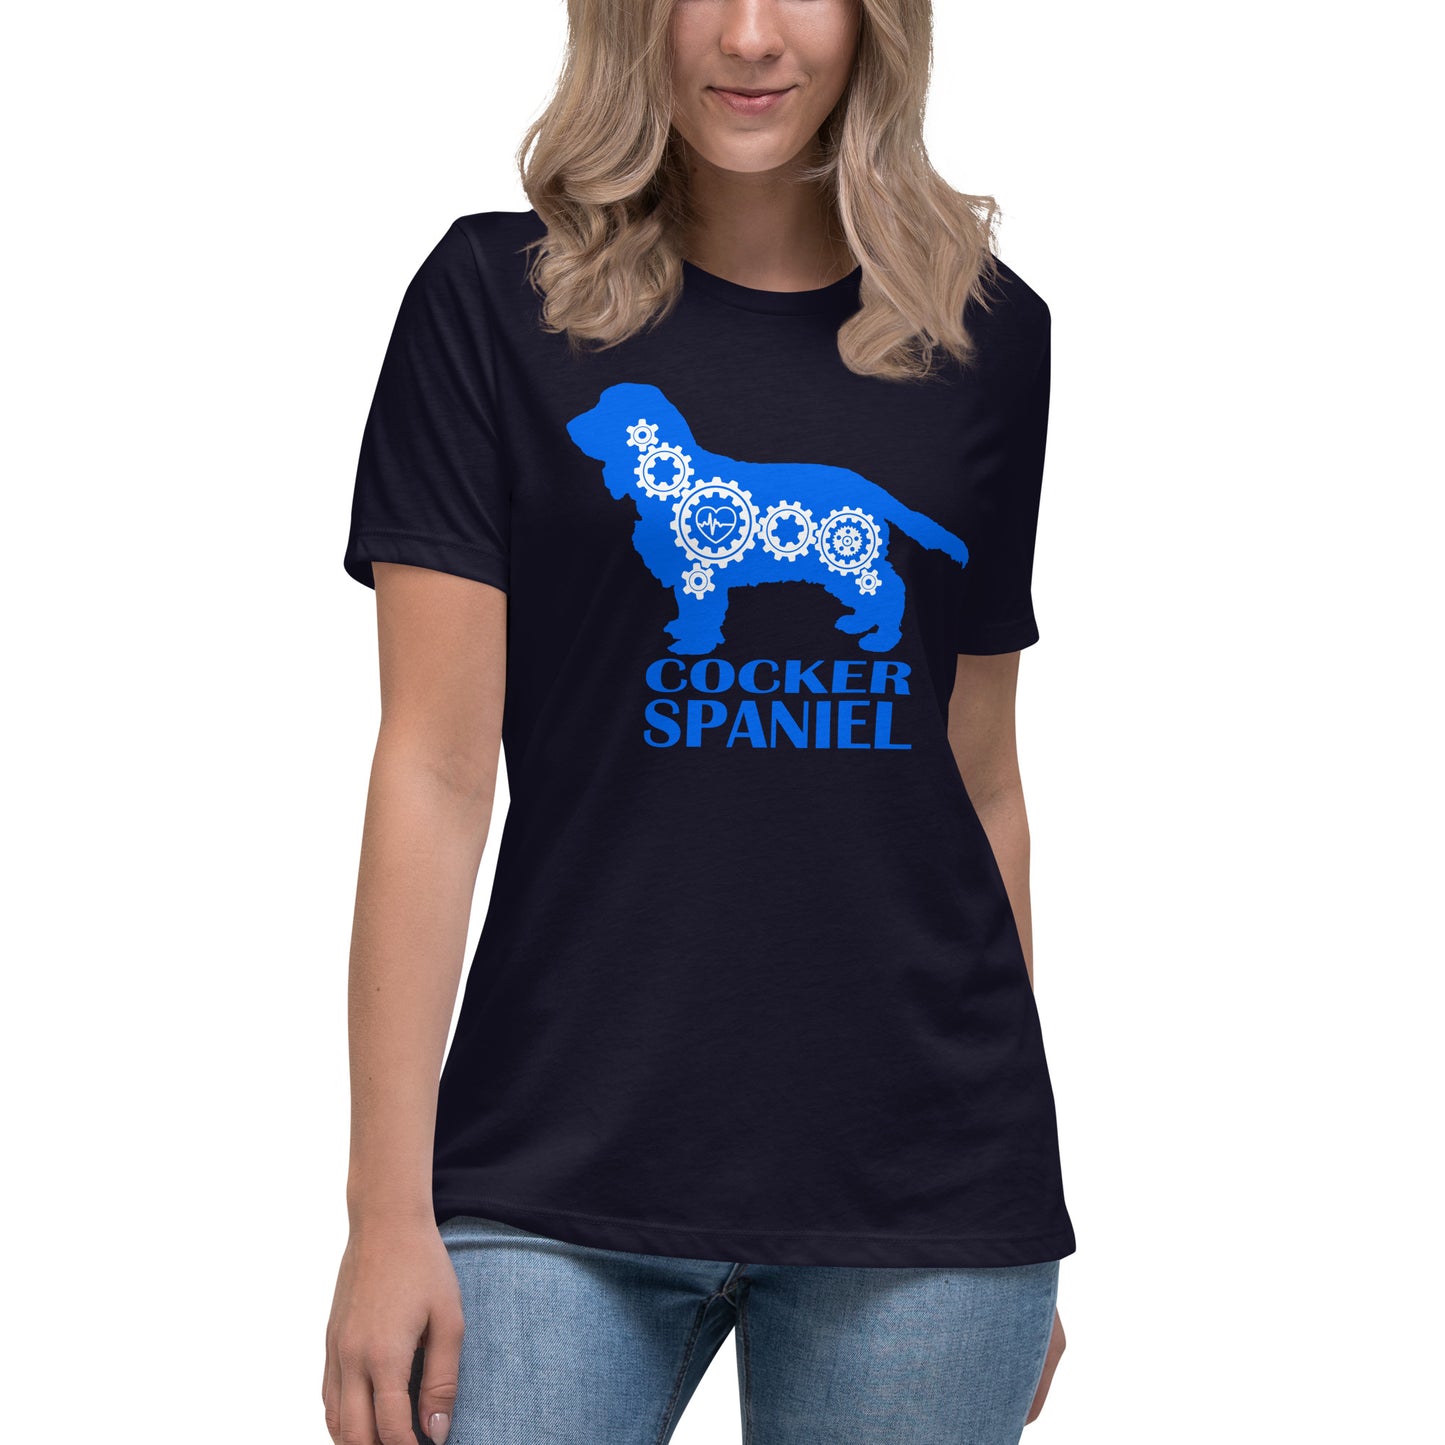 Cocker Spaniel Bionic women’s navy t-shirt by Dog Artistry.